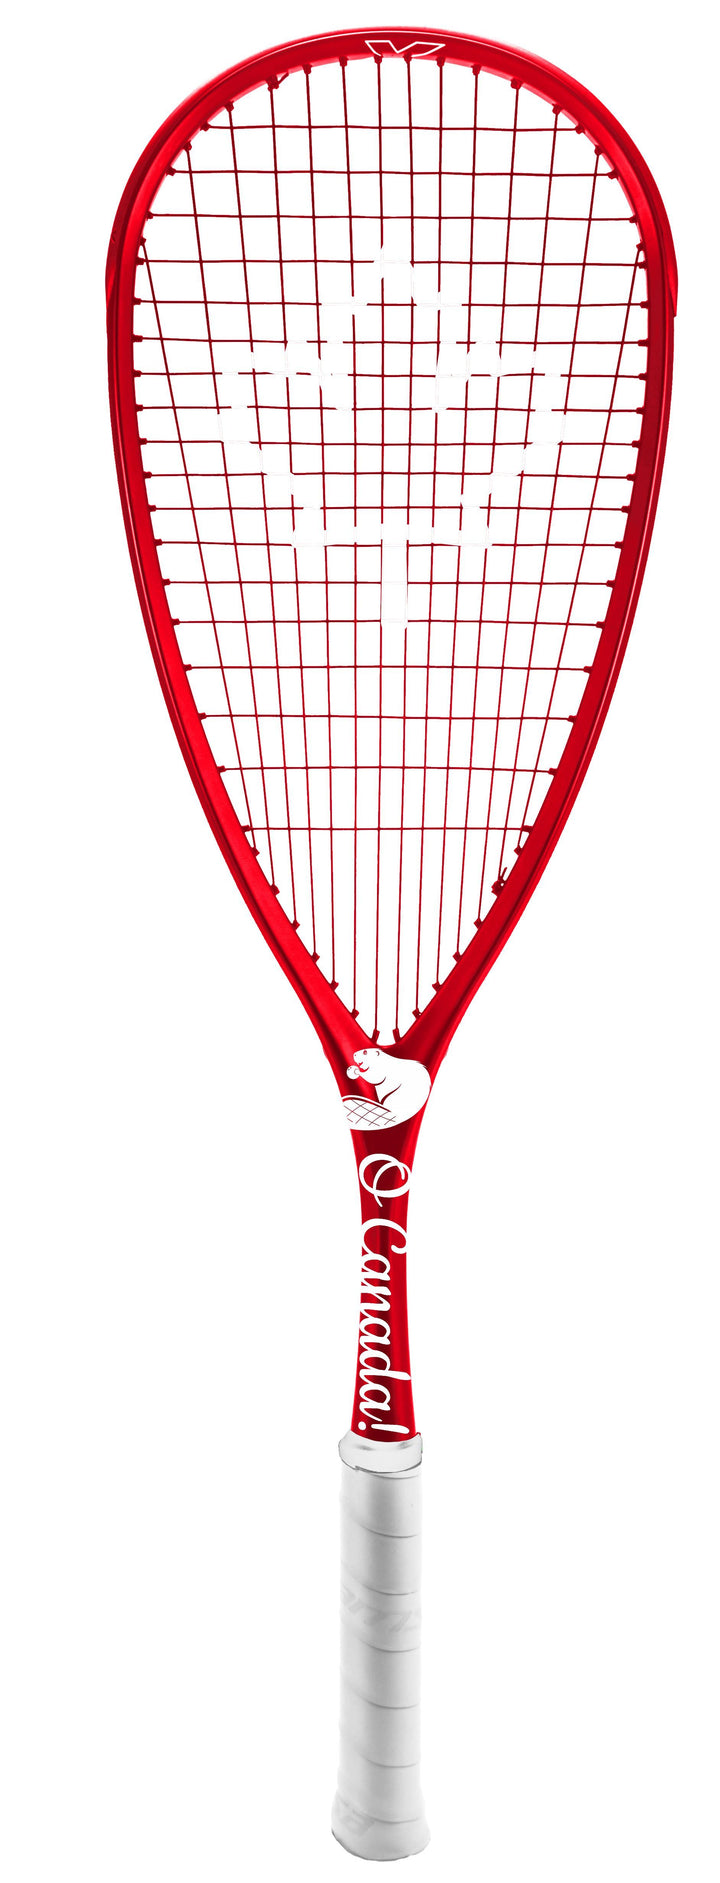 Xamsa Onyx - O Canada! - Limited Edition Squash Racquet with Top Bumper Squash Racquets Xamsa Strung with Xamsa PM18 Red with Canada Stencil 